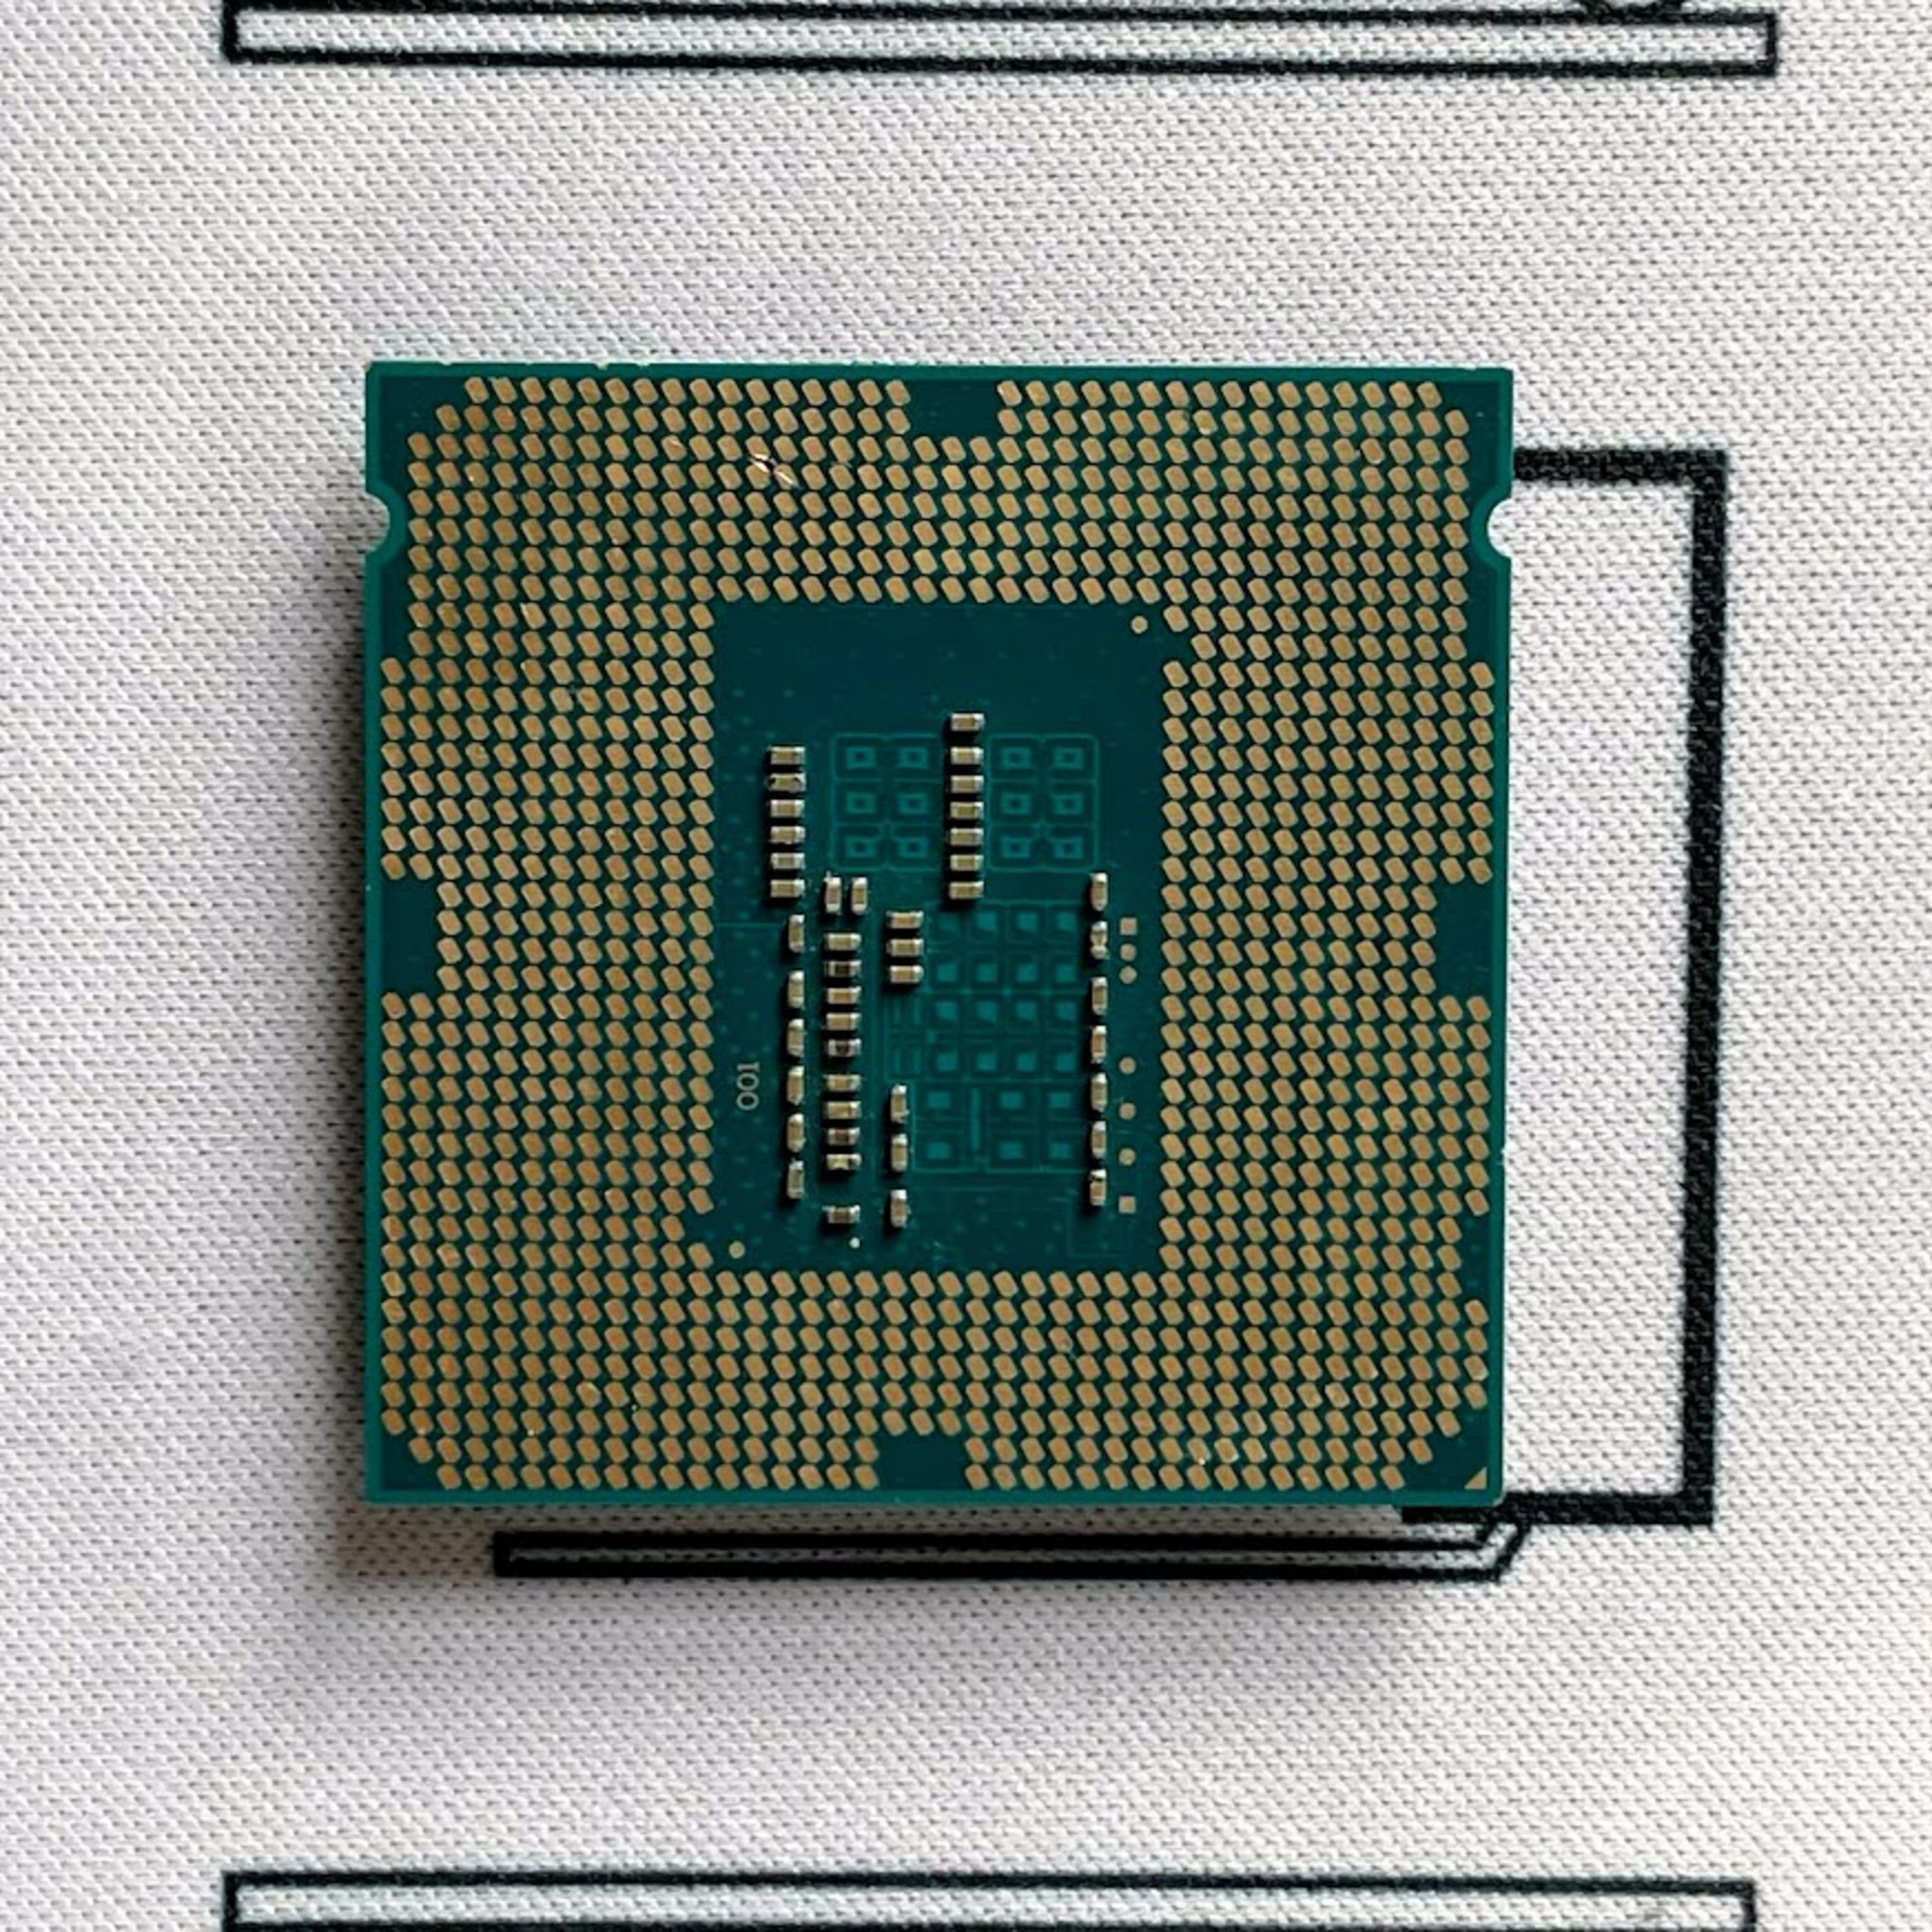 Intel i3-4130 3.40GHz Dual-Core 3MB LGA1150 CPU Processor SR1NP 54W